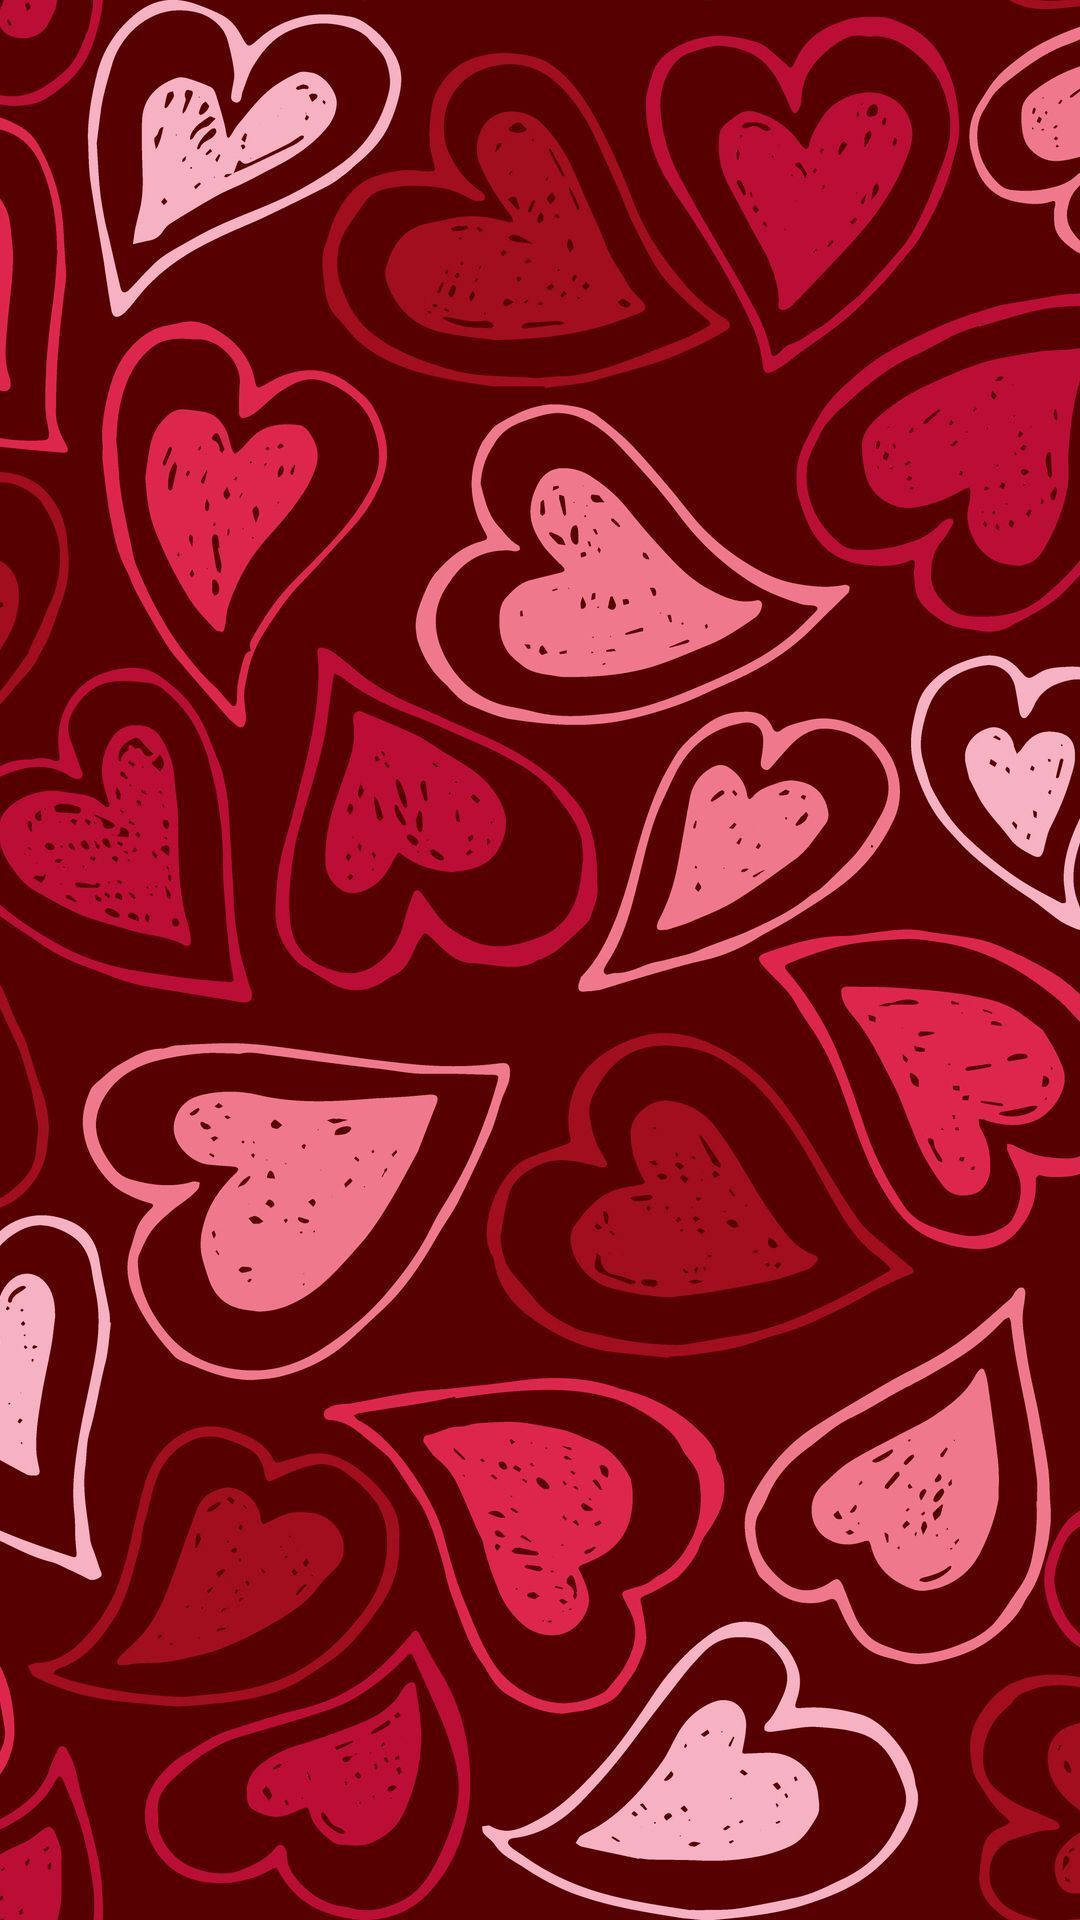 Red Curvy Wildflower Hearts Background